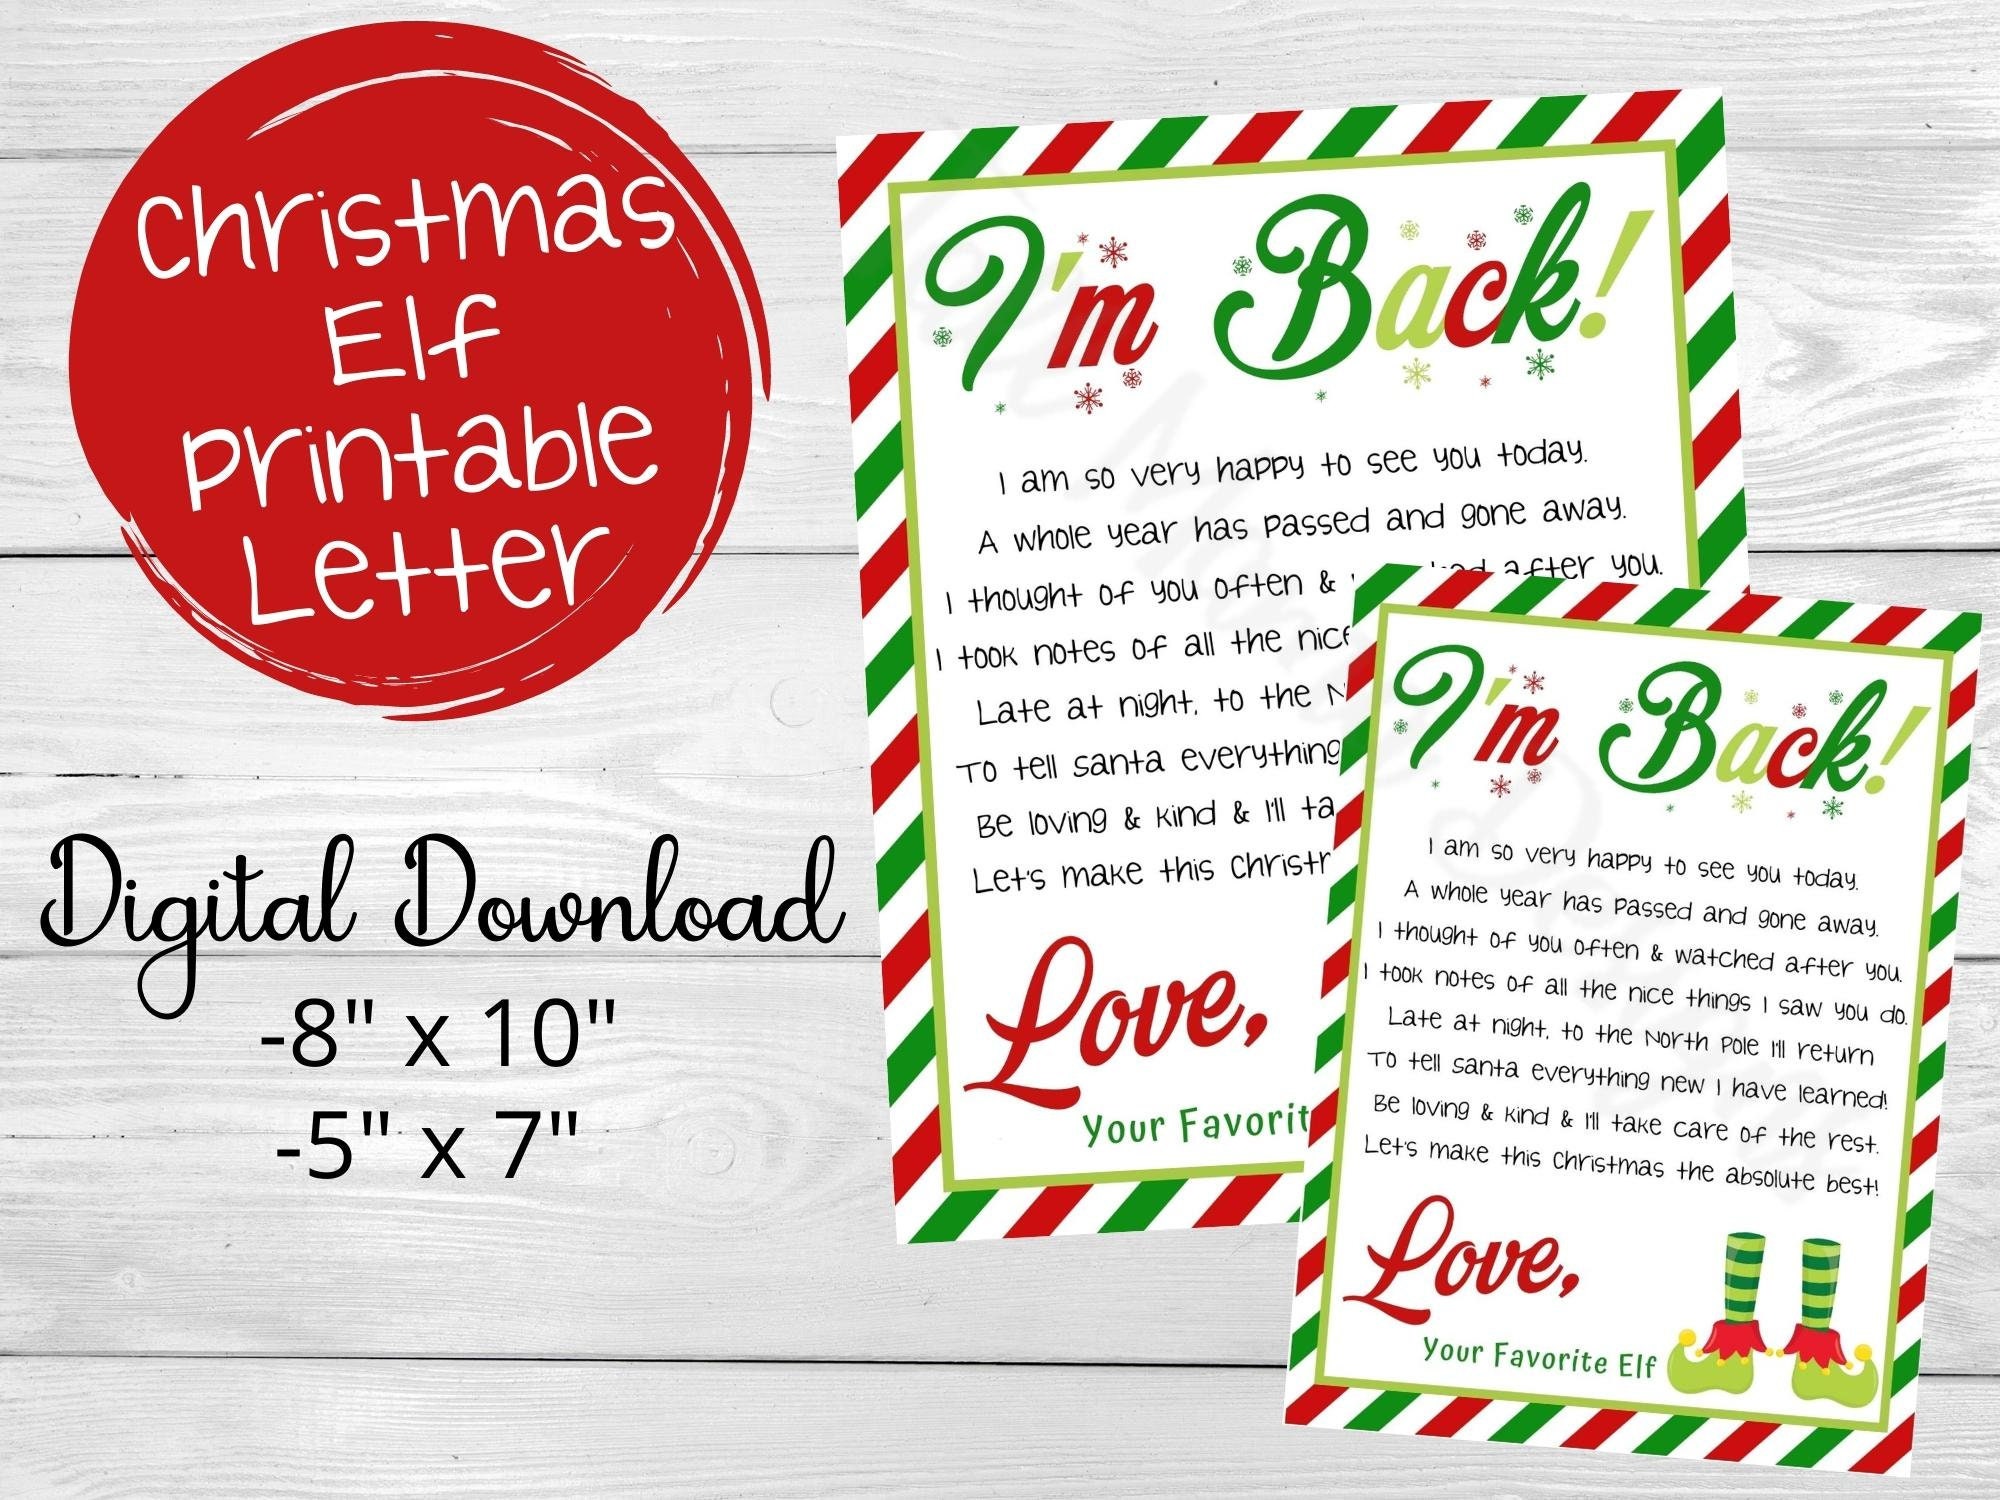 christmas-elf-printable-letter-i-m-back-christmas-elf-etsy-uk